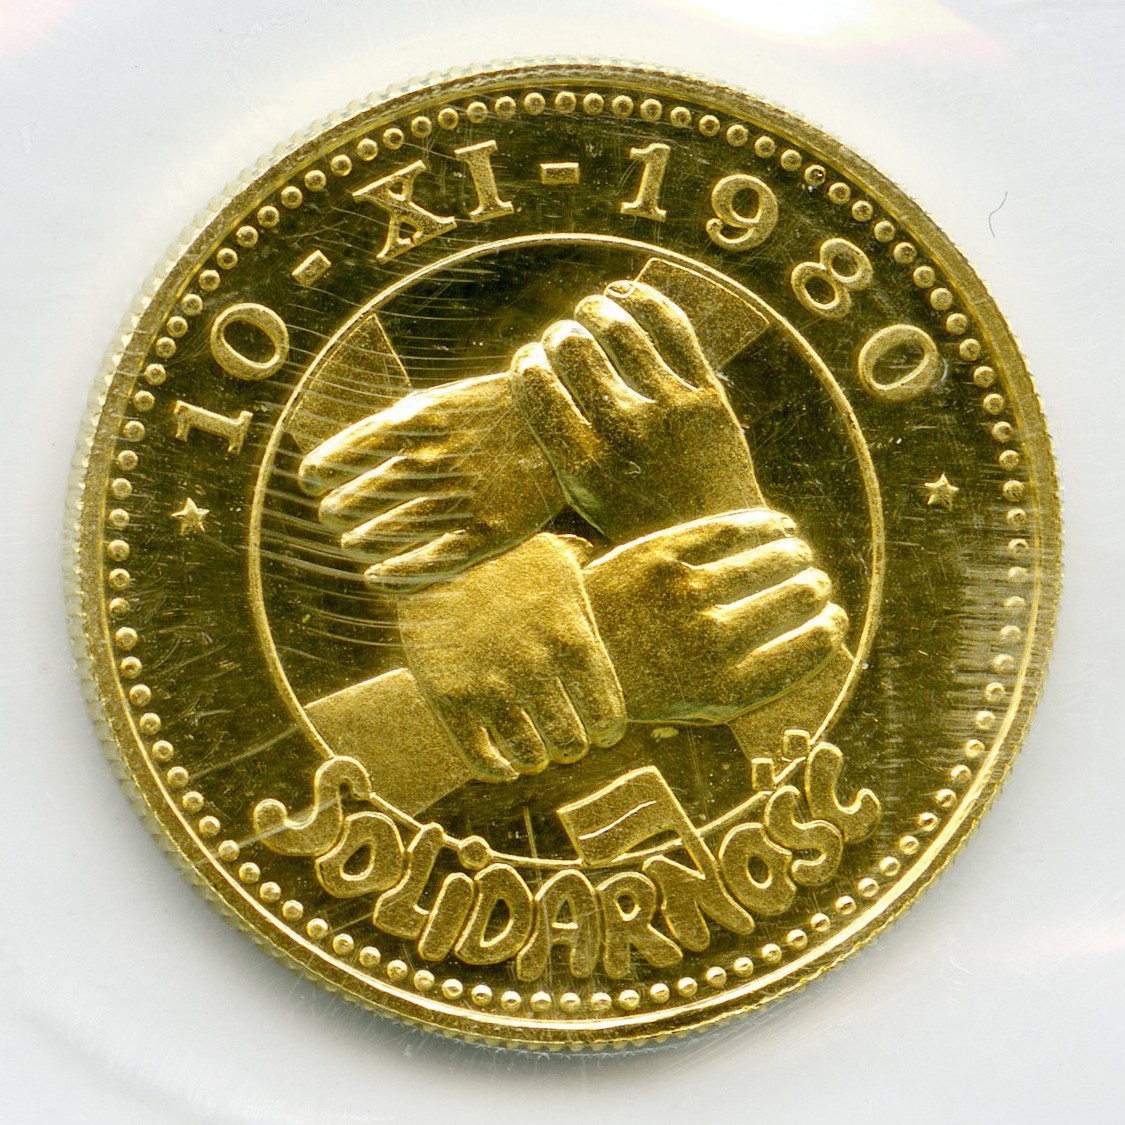 Lech Walesa - Médaille Or - 1981 revers